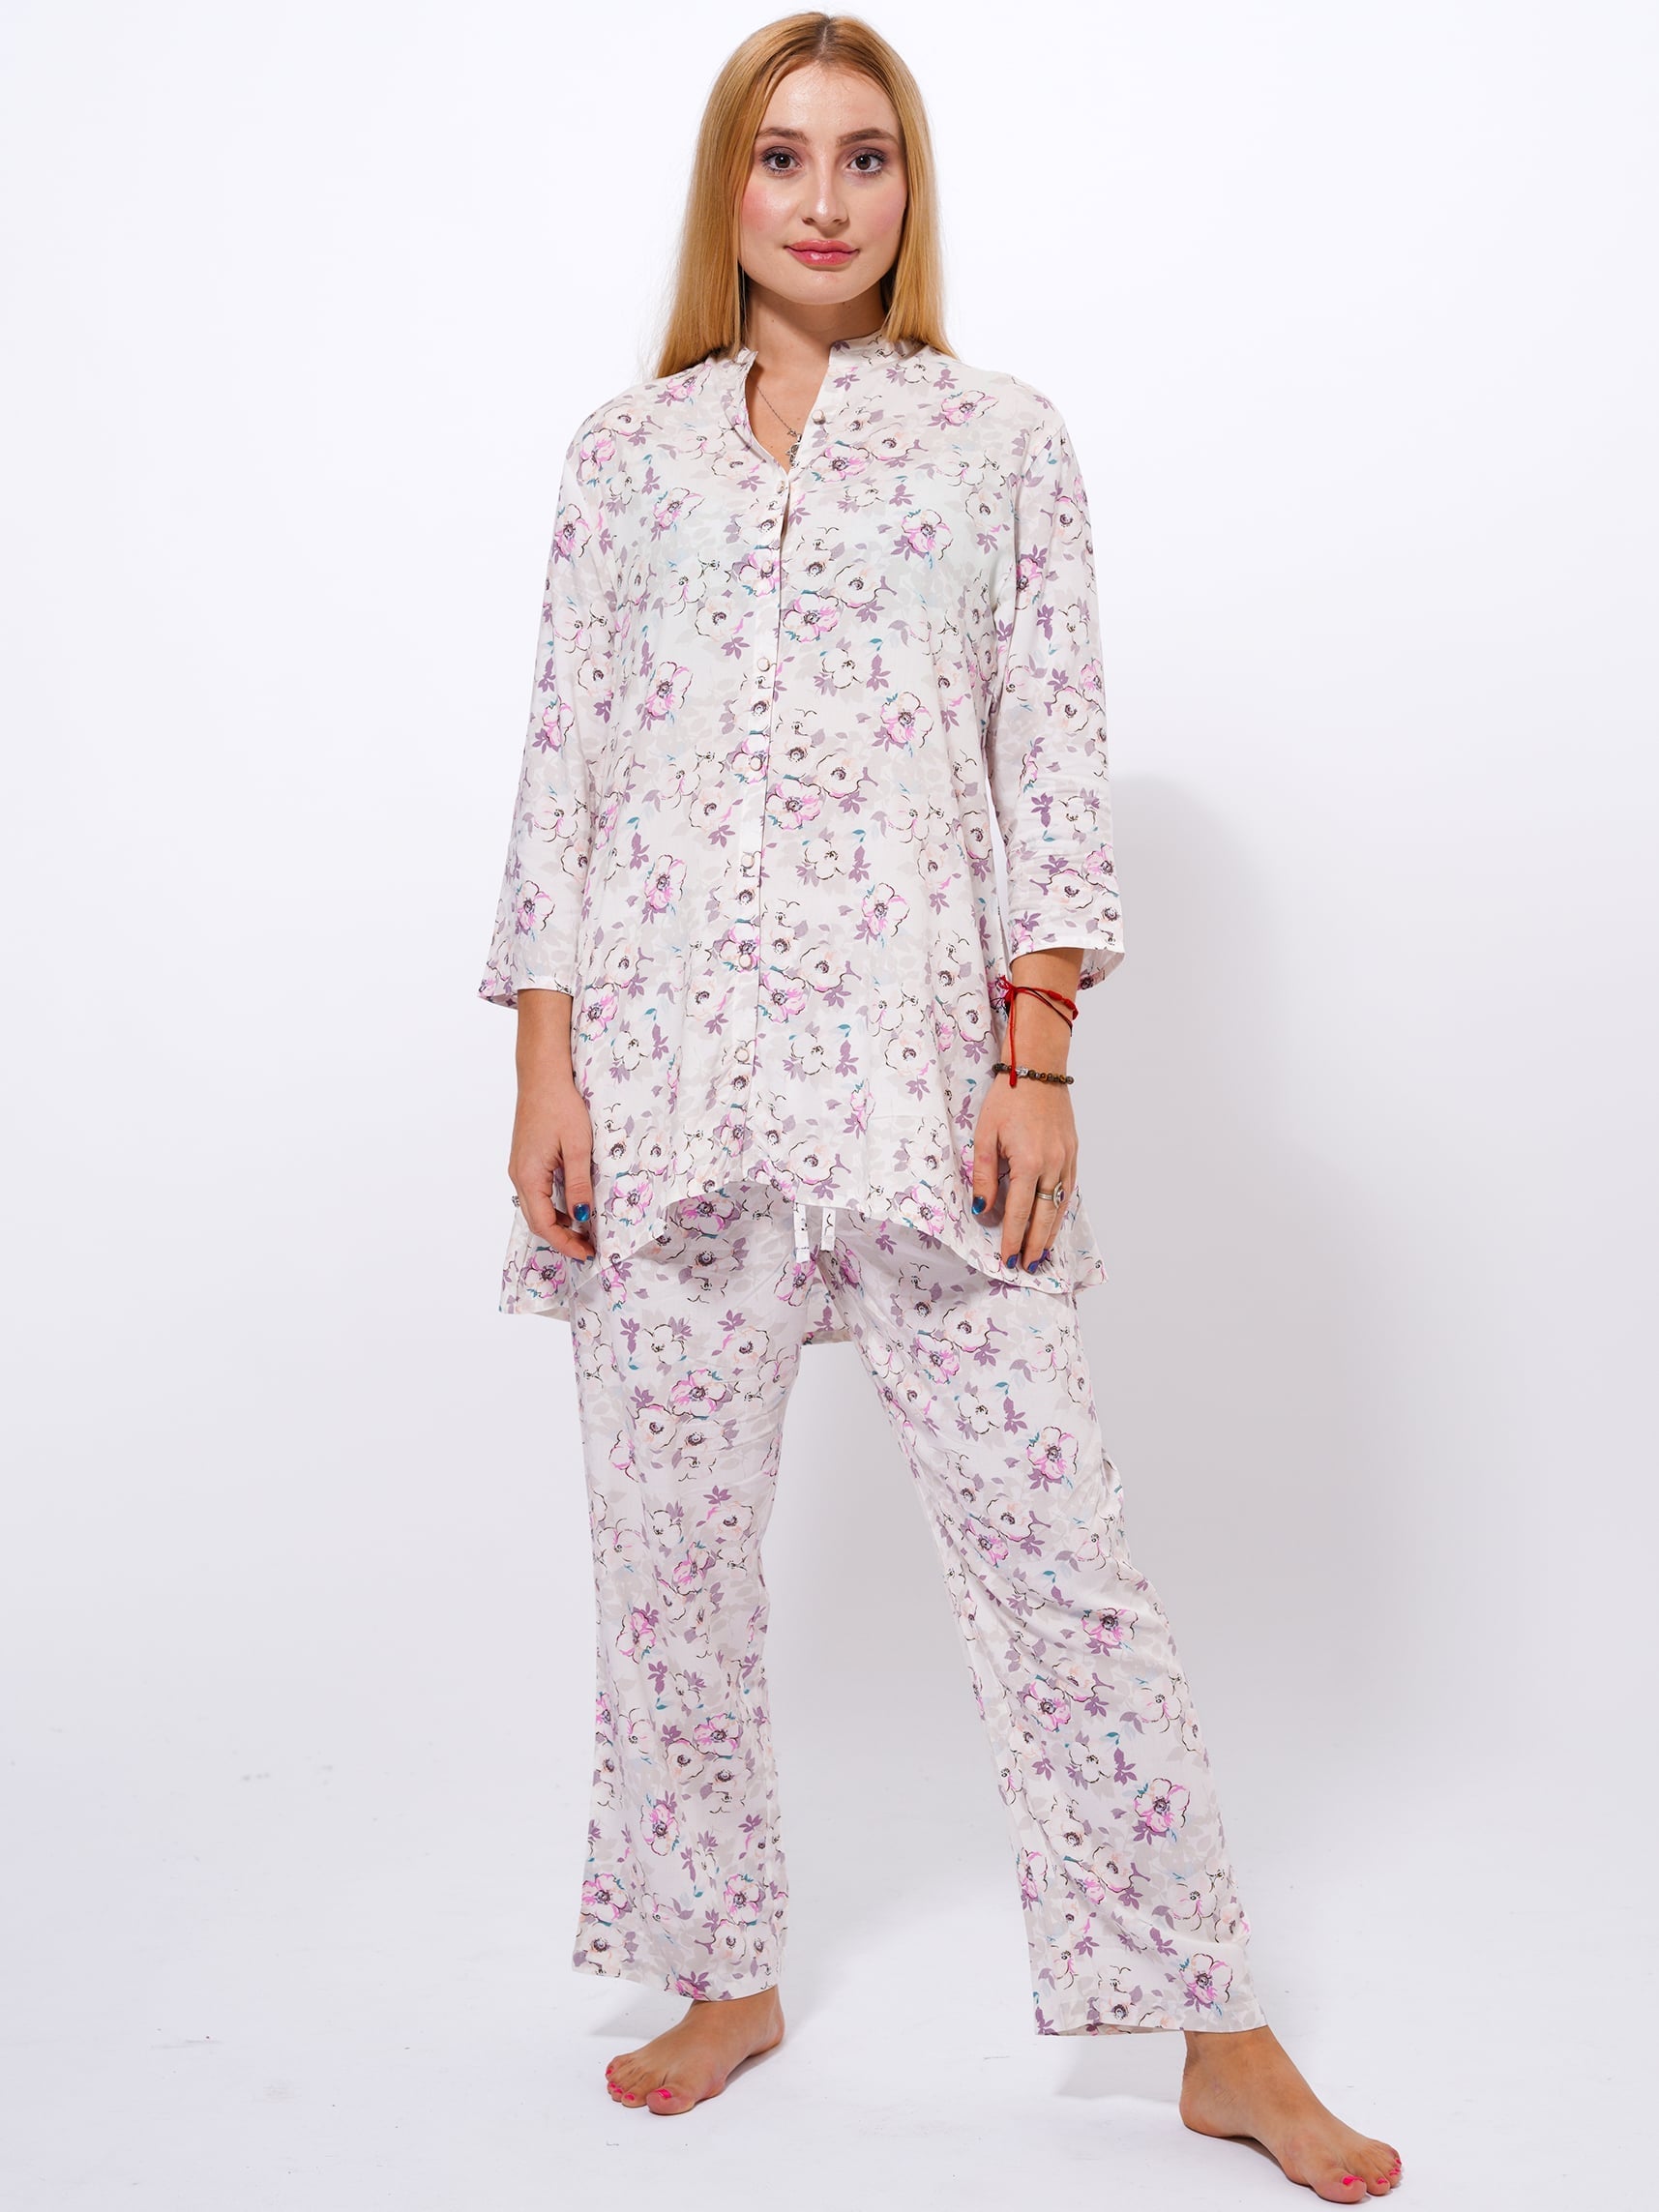 Floral PJs for Women - Cute Spring Sleepwear Set - inteblu